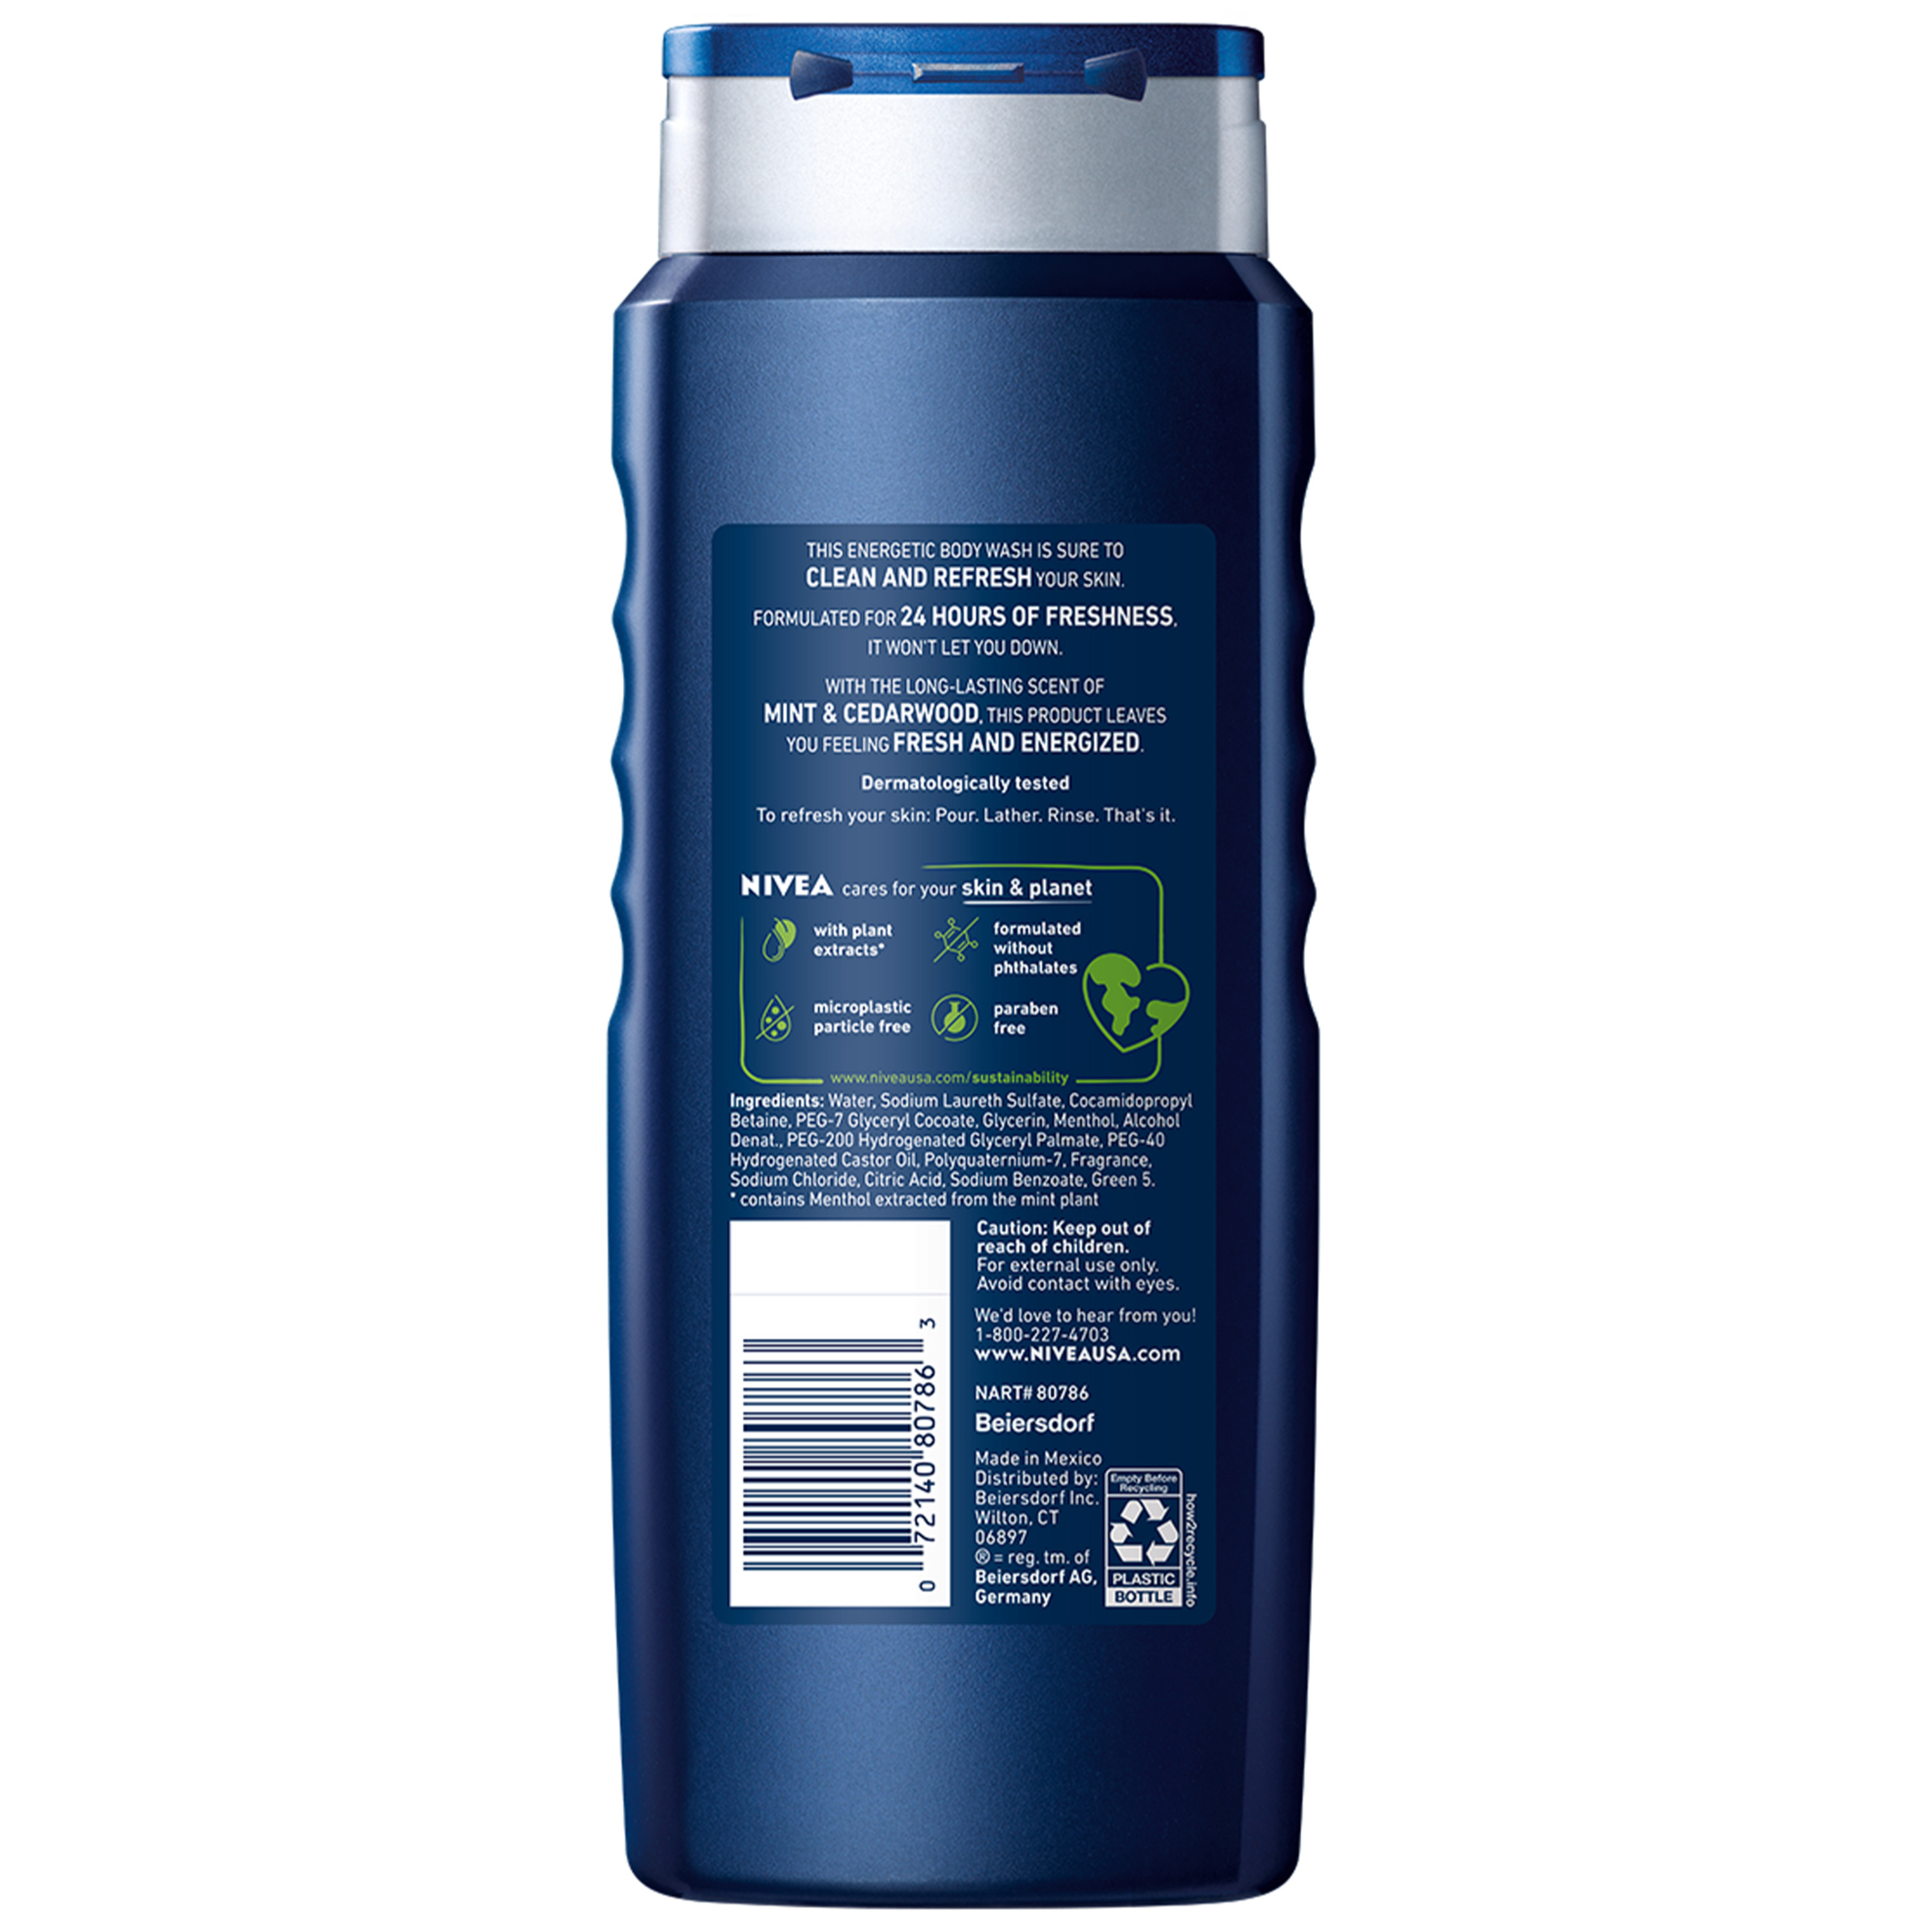 NIVEA MEN Energy Body Wash for Mint Extract, 16.9 Fl Oz Bottle - image 6 of 6